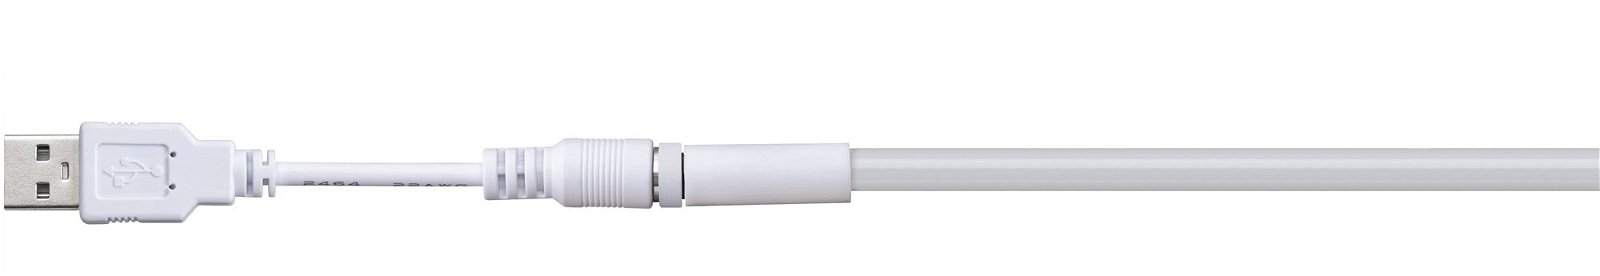 USB LED Strip Neon Colorflex Groen 1m 4,5W 10lm/m